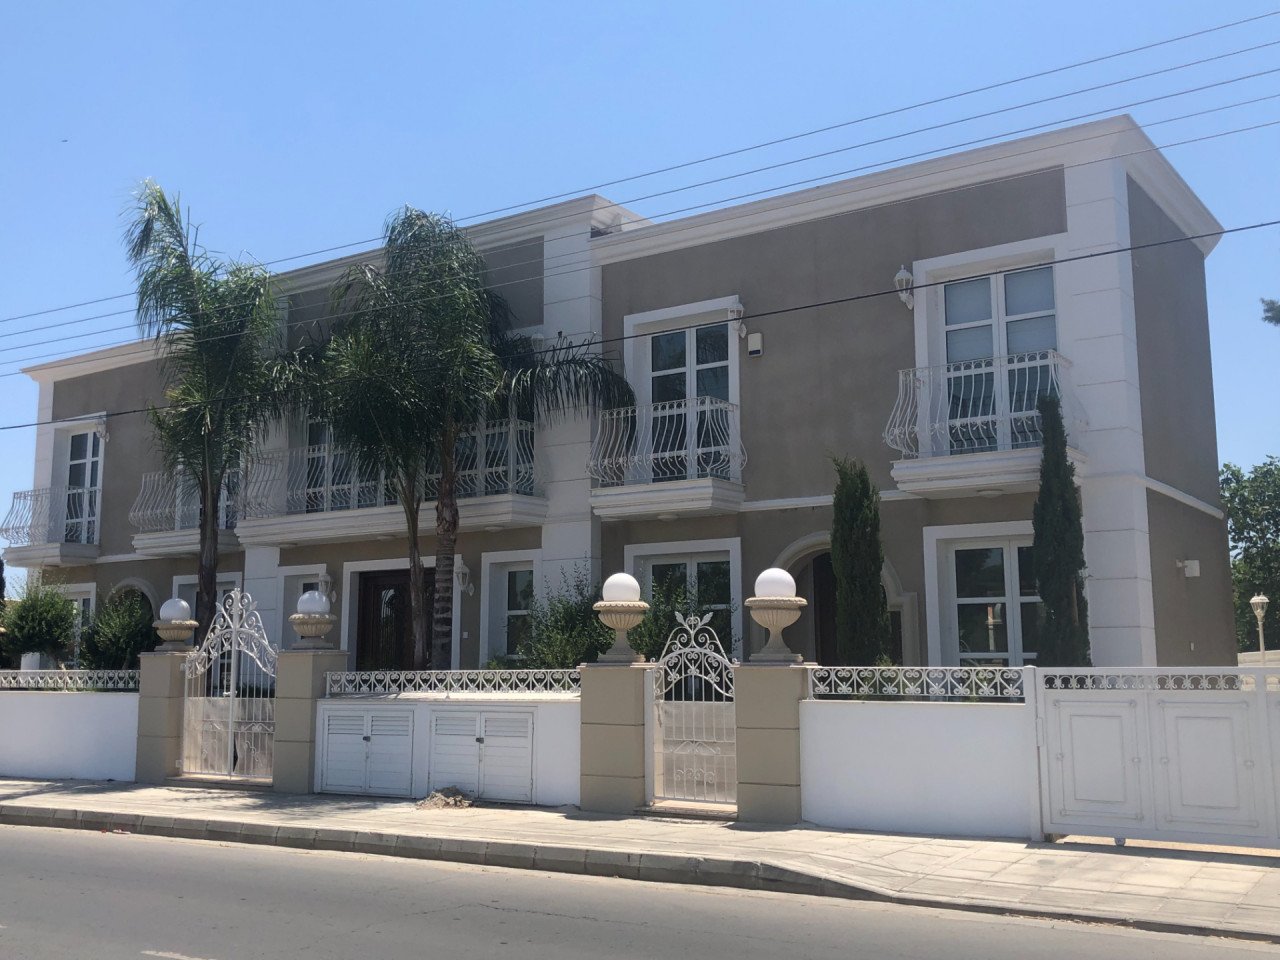 For Sale: House (Semi detached) in Polemidia (Kato), Limassol for Rent | Key Realtor Cyprus